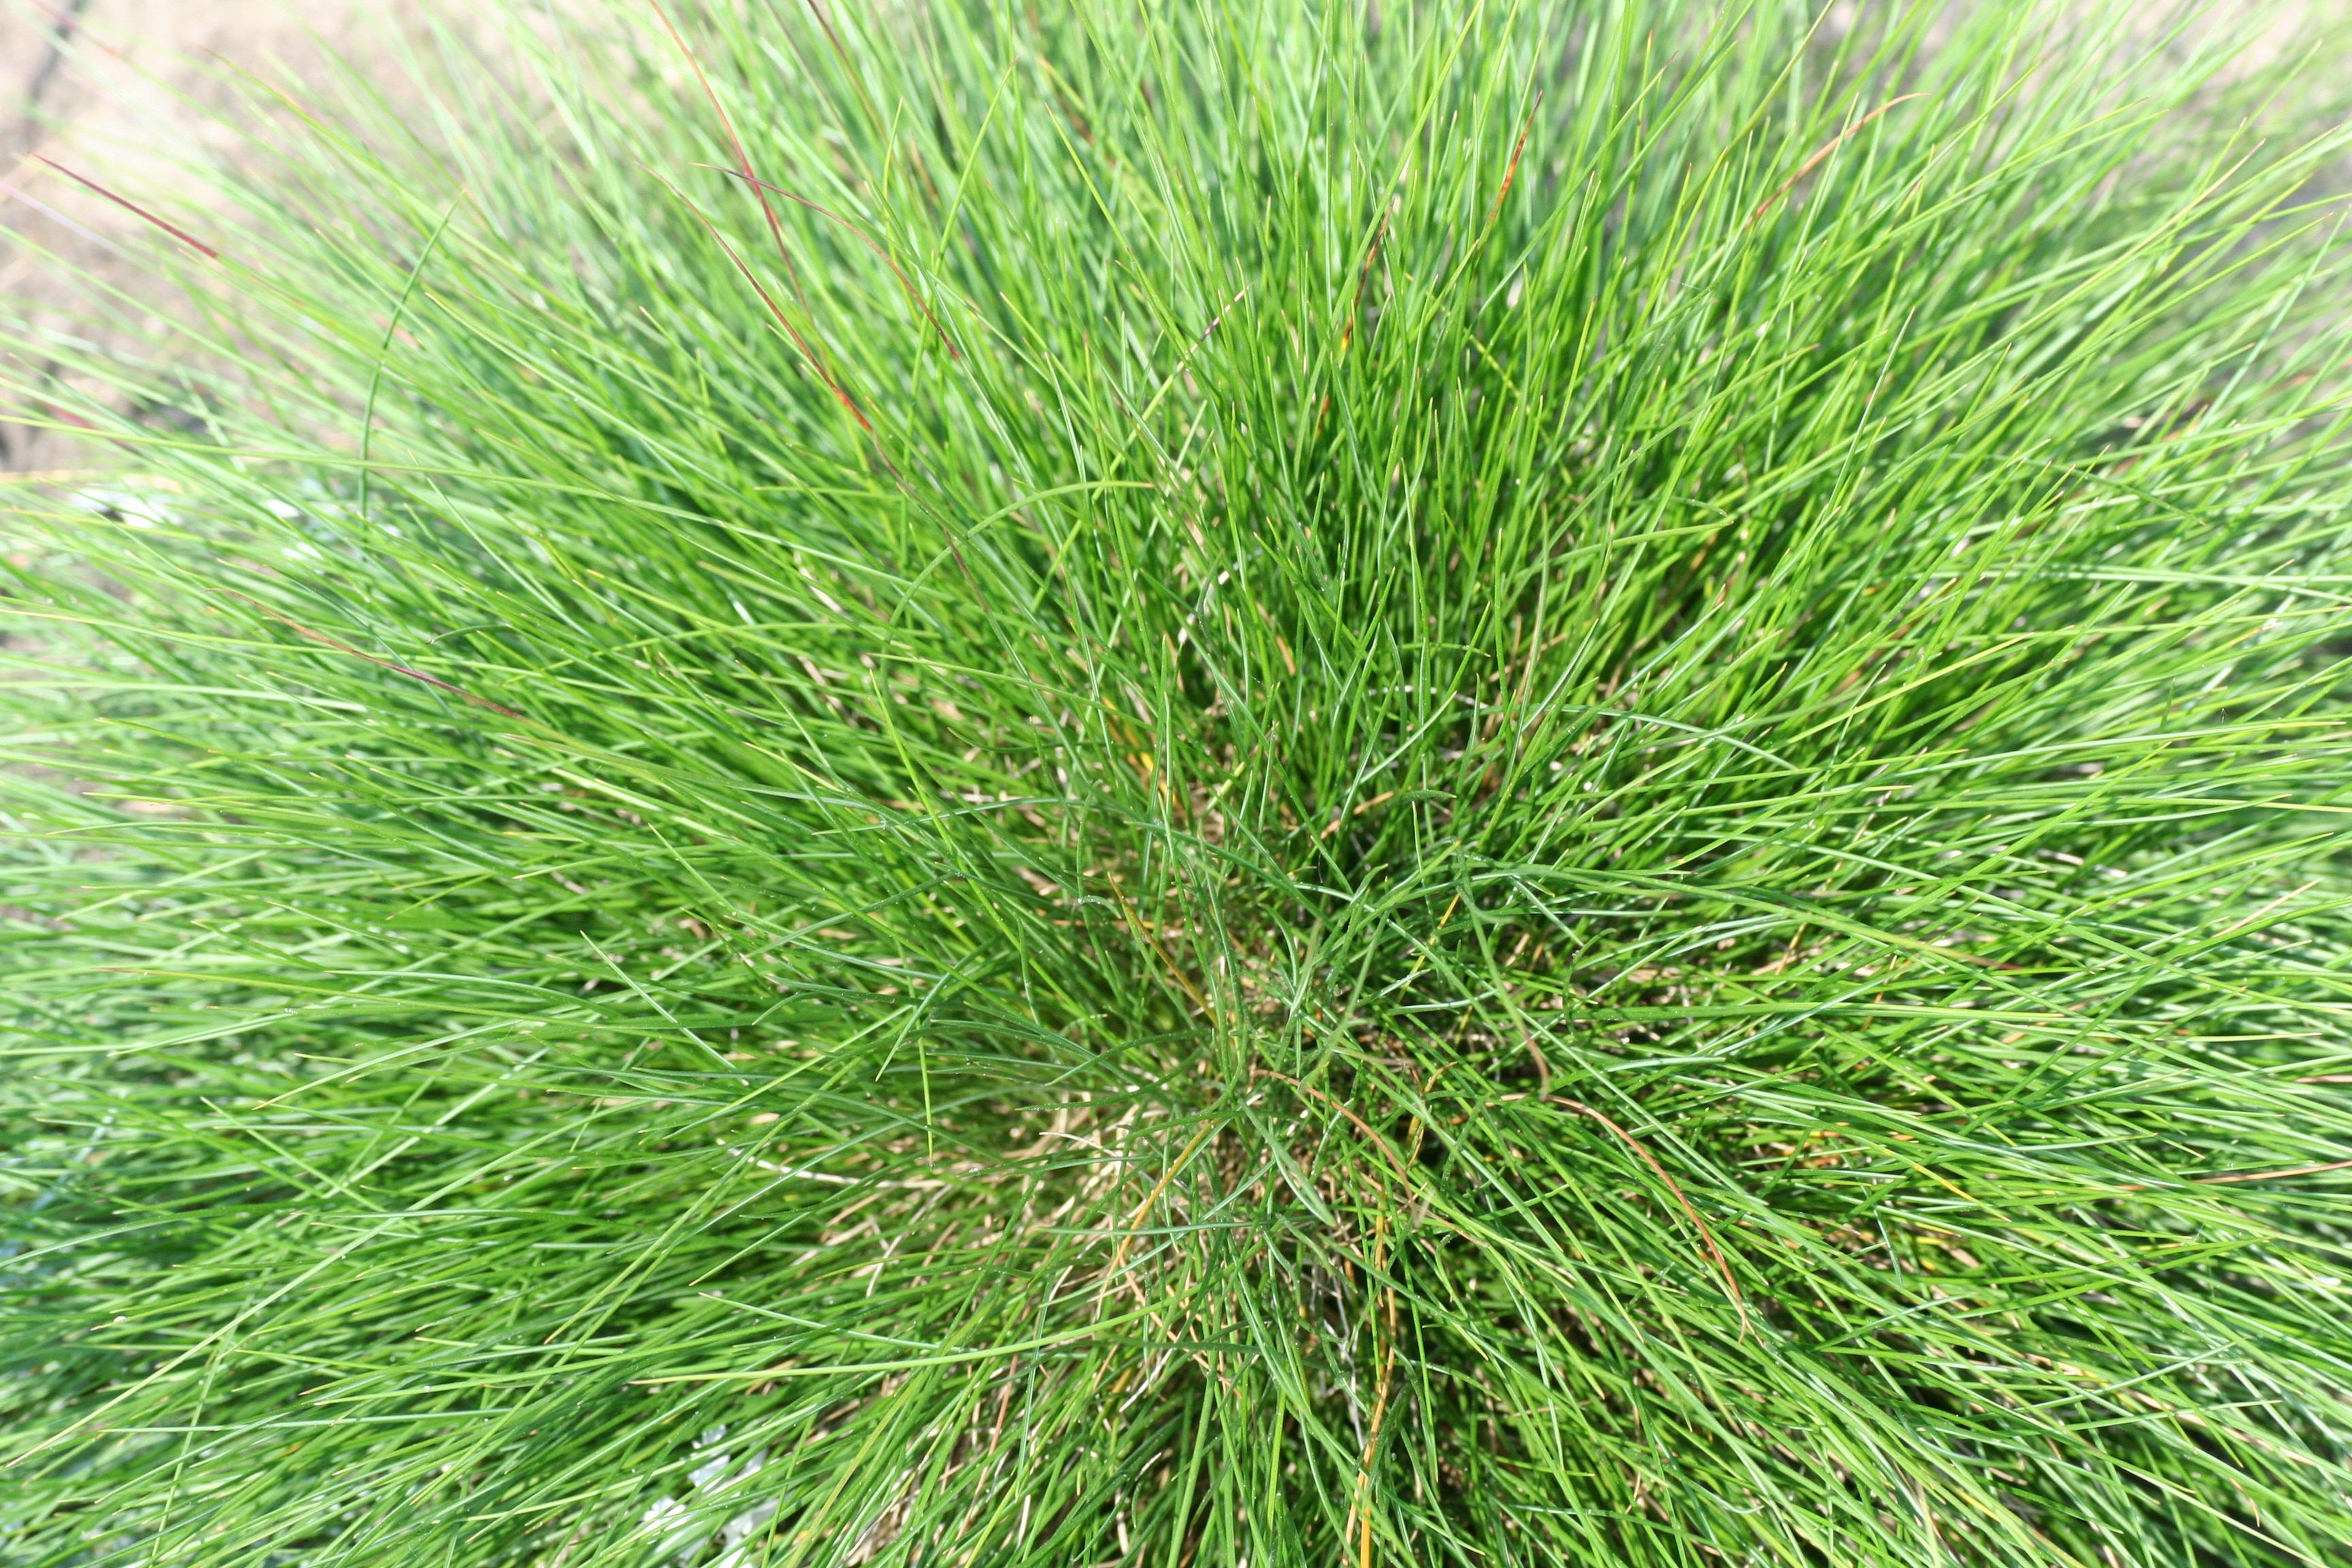 tree-grass-plant-lawn-flower-herb-decorative-shrub-flooring-flowering-plant-wheatgrass-meadow-fescue-festuca-grass-family-land-plant-668978.jpg